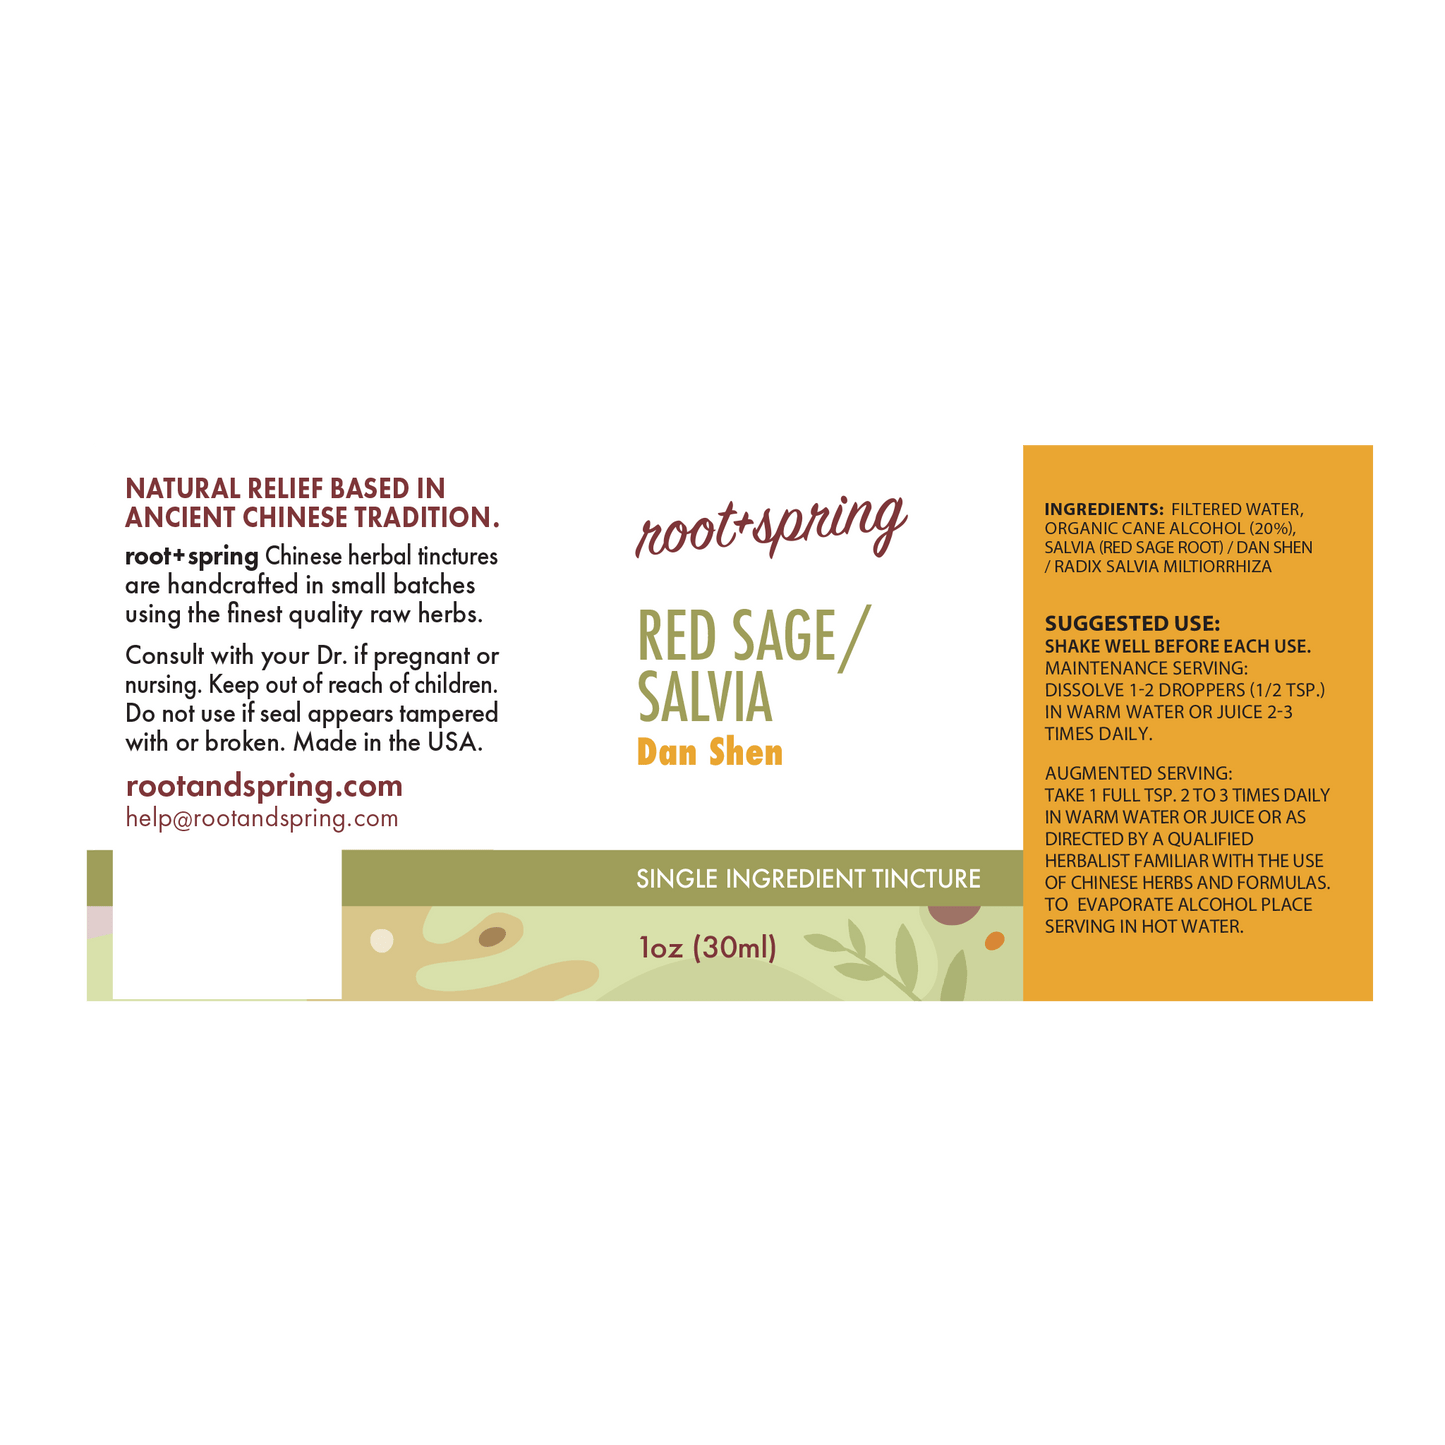 Red Sage/Salvia (Dan Shen Tang) - Herbal Tincture